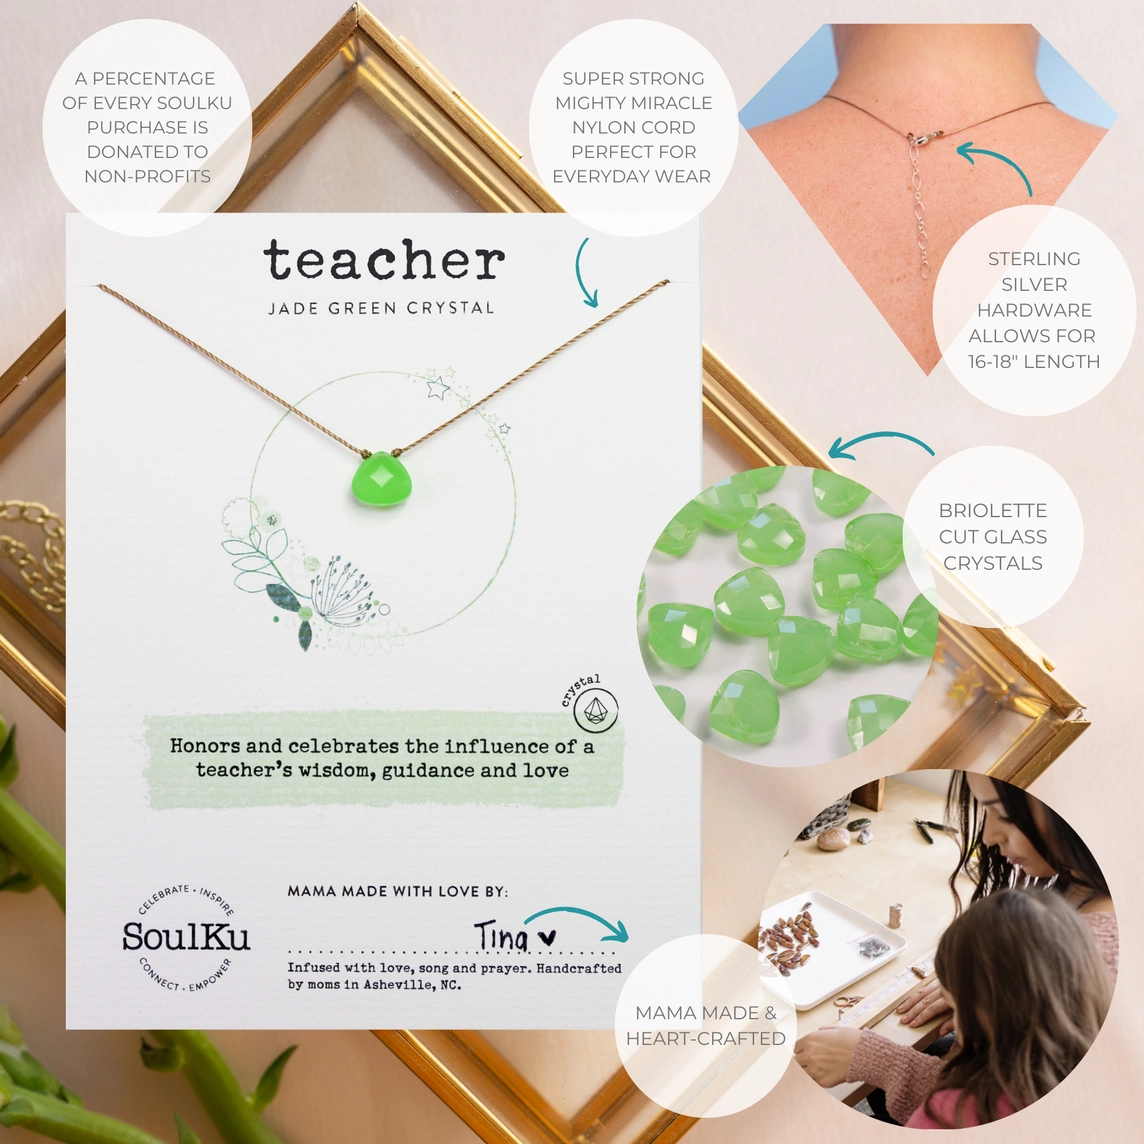 Soul Shine Necklace Jade Green for Teachers